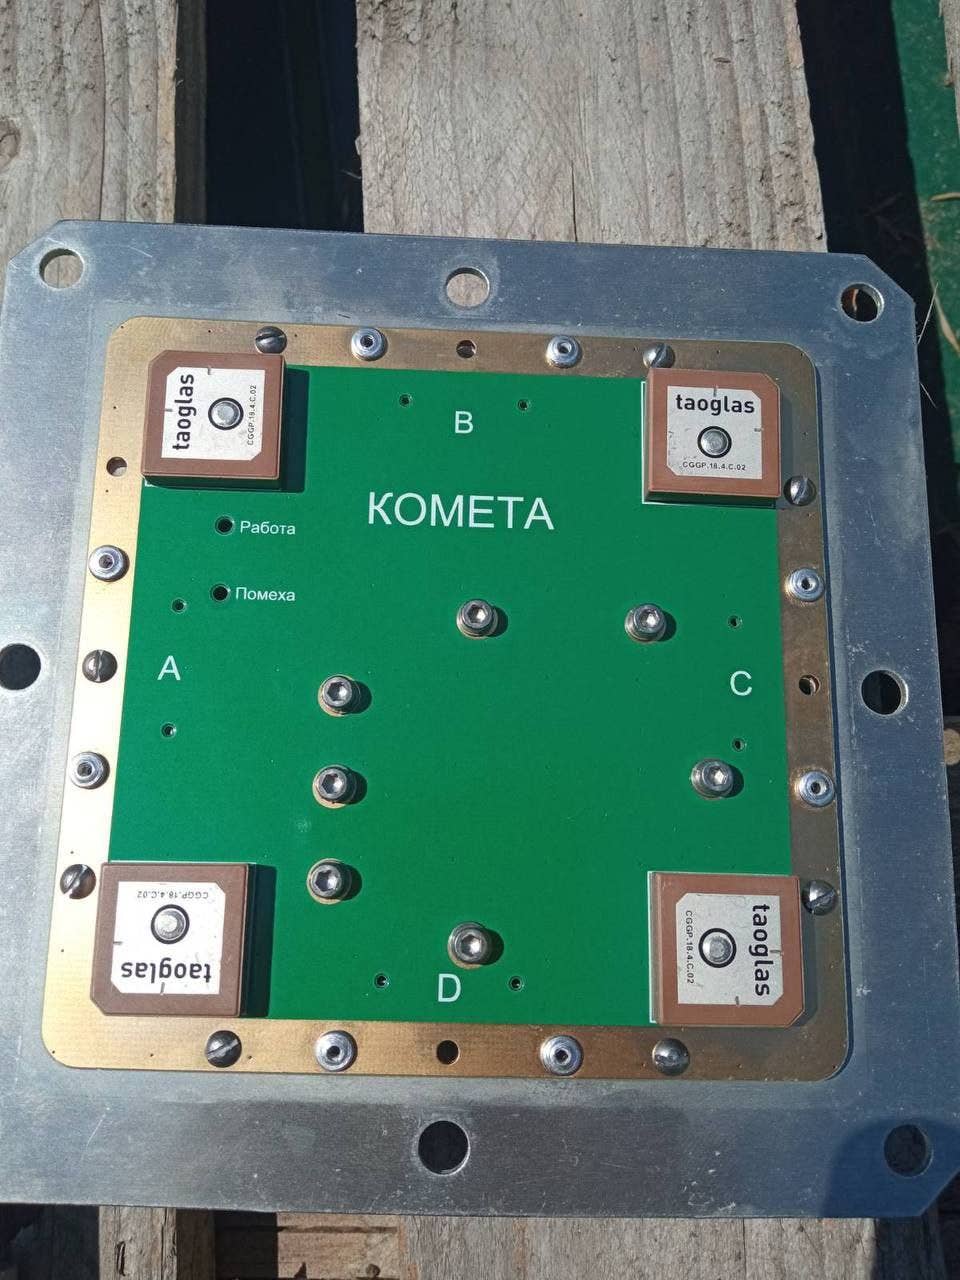 8-Kometa-M-satellite-receiver-antenna-13-July-2023-02cMilinfolive-TG-channel.jpg